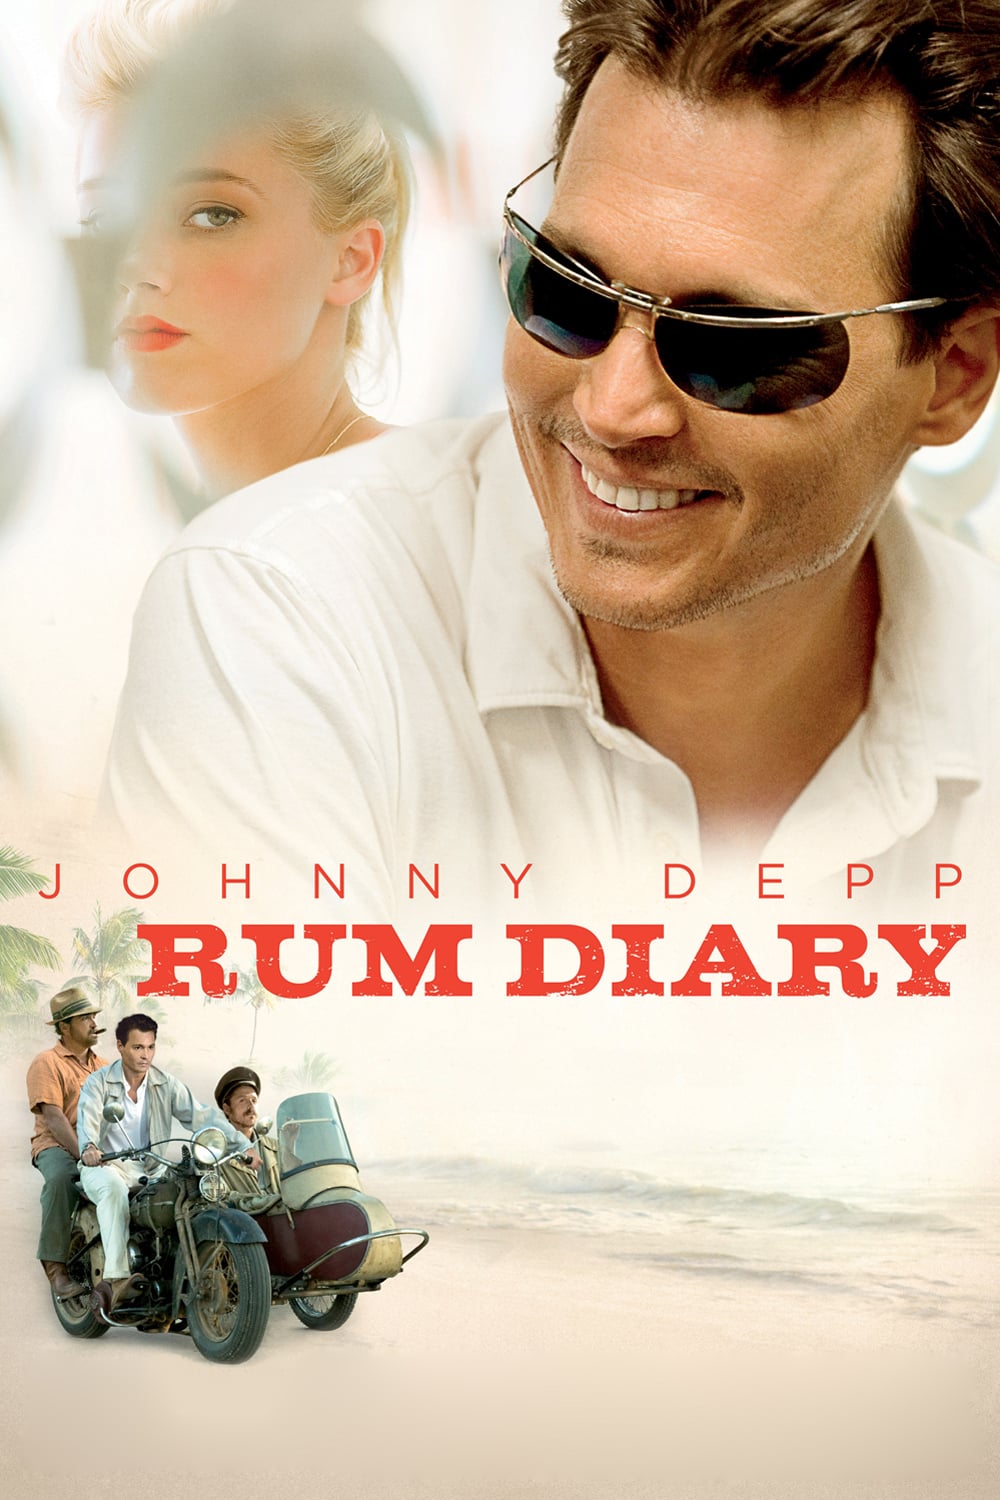 Plakat von "The Rum Diary"